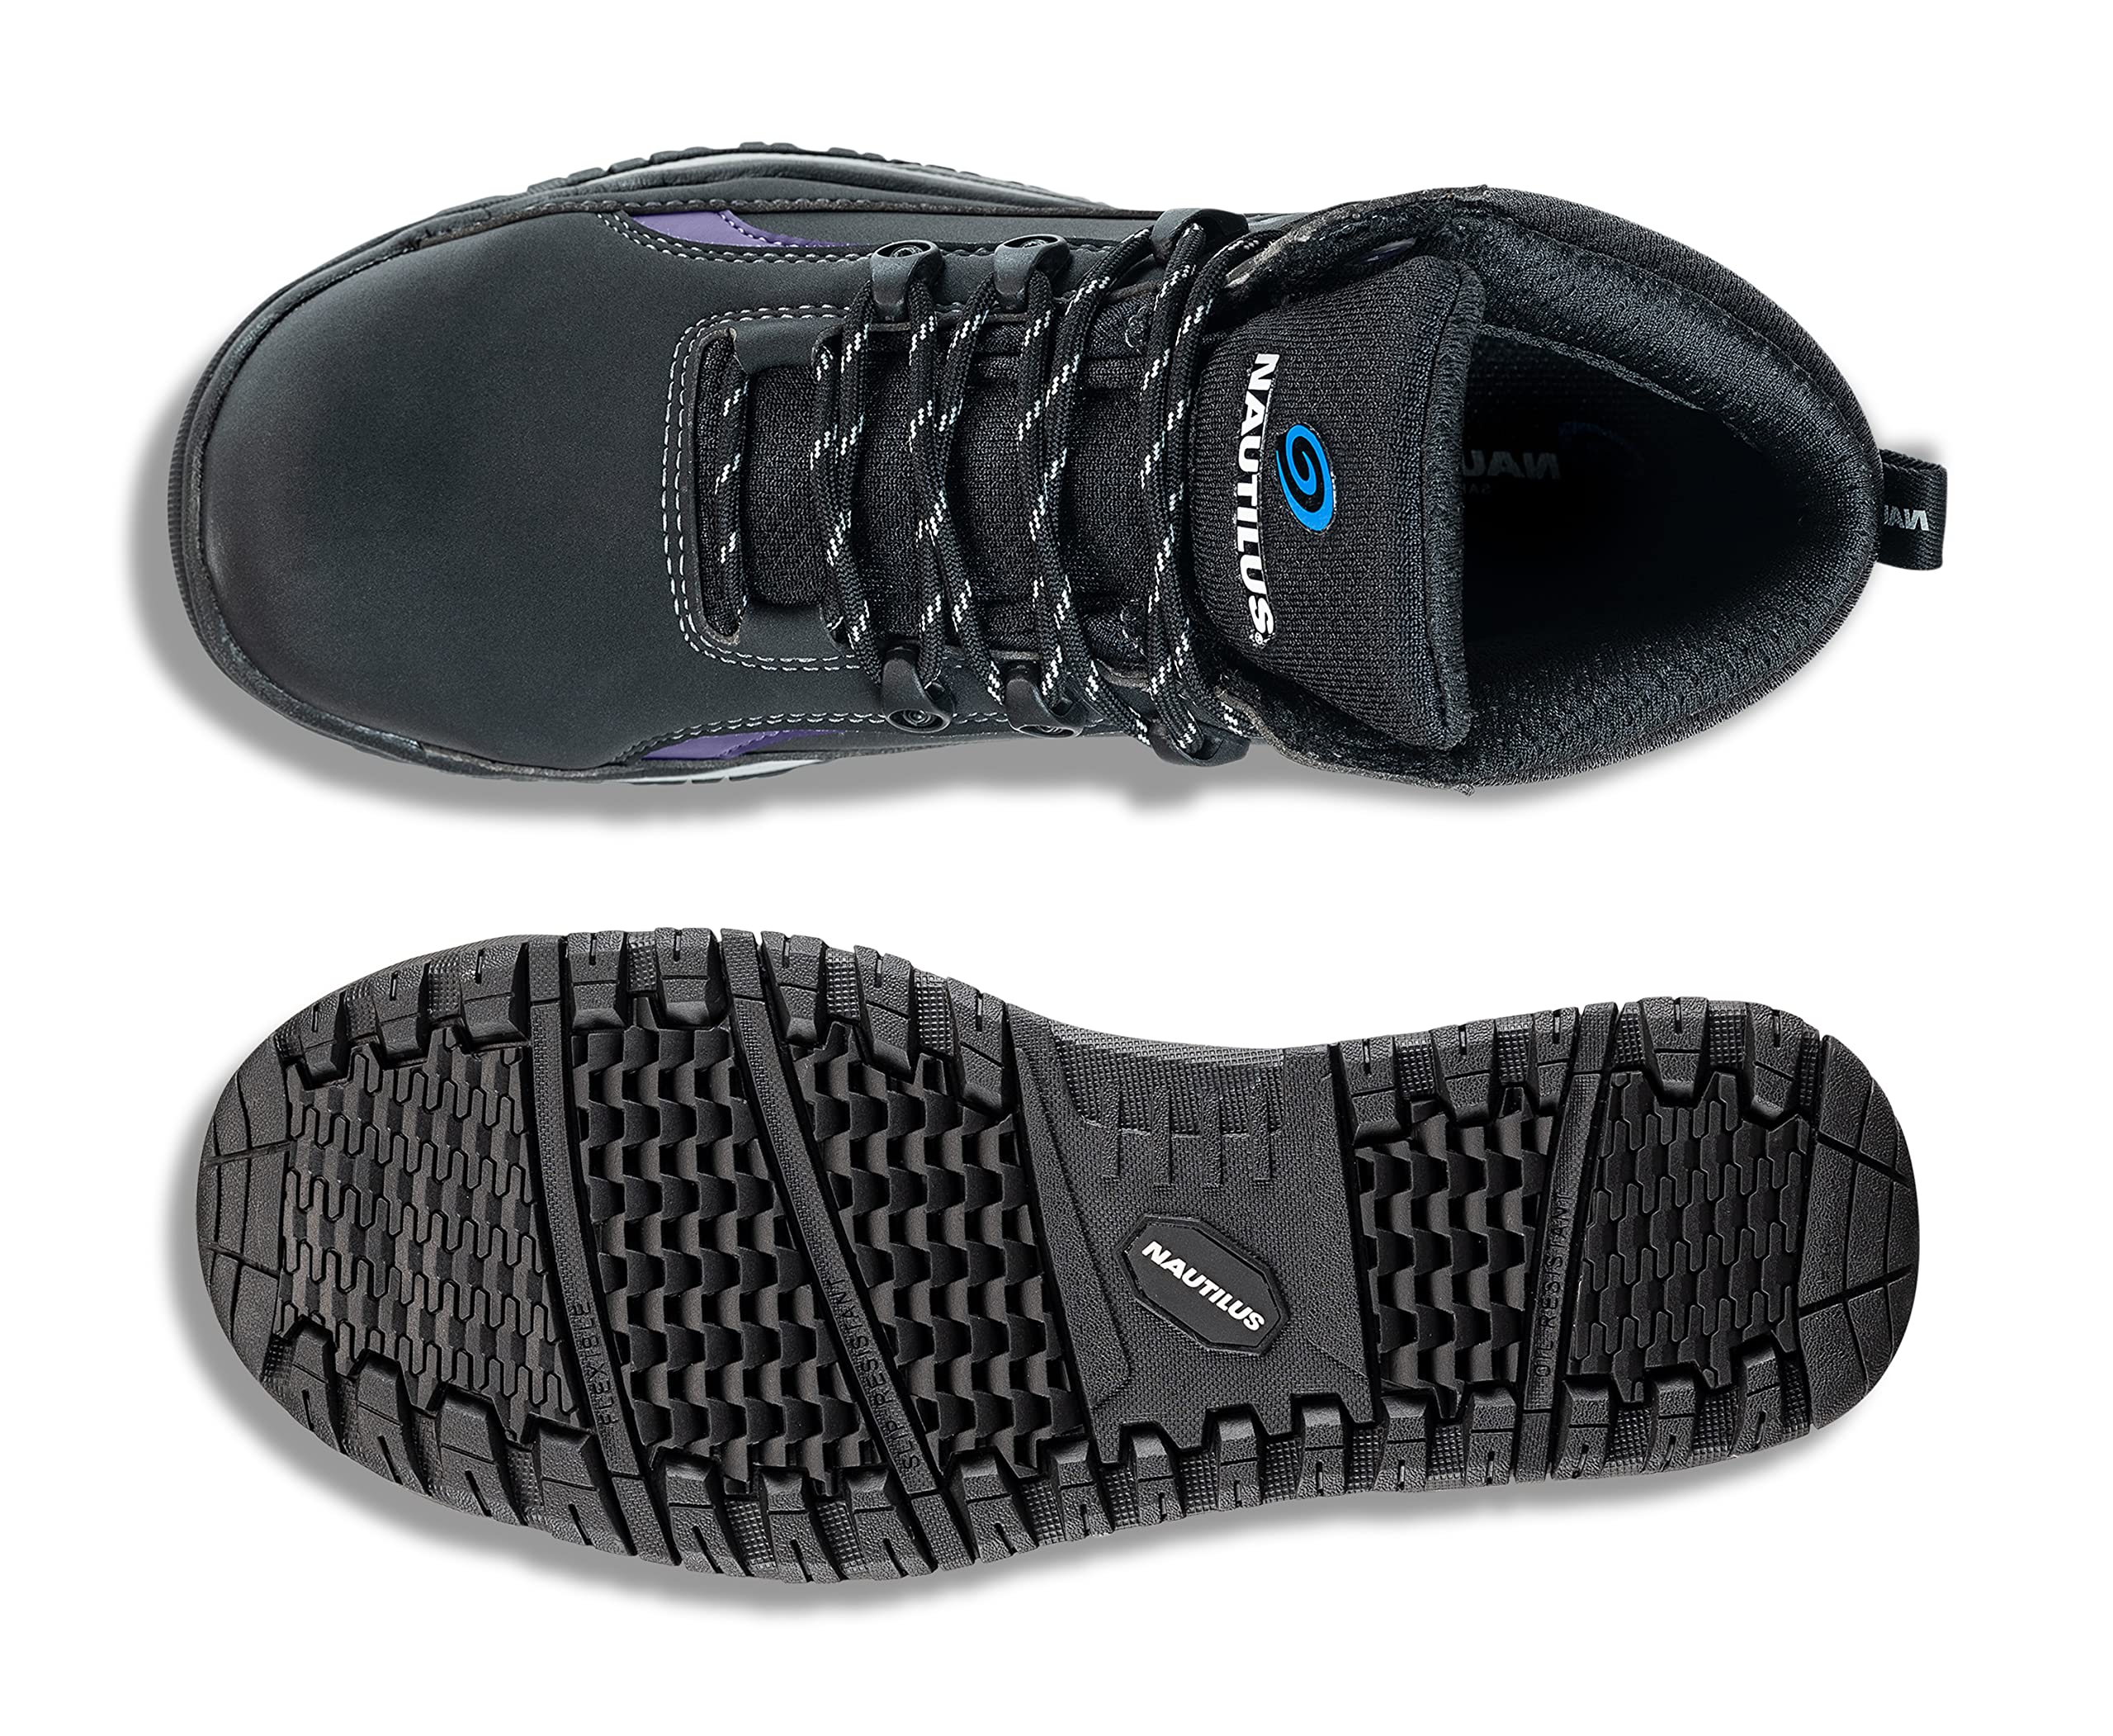 Nautilus Safety Footwear Women's Urban Industrial Boot